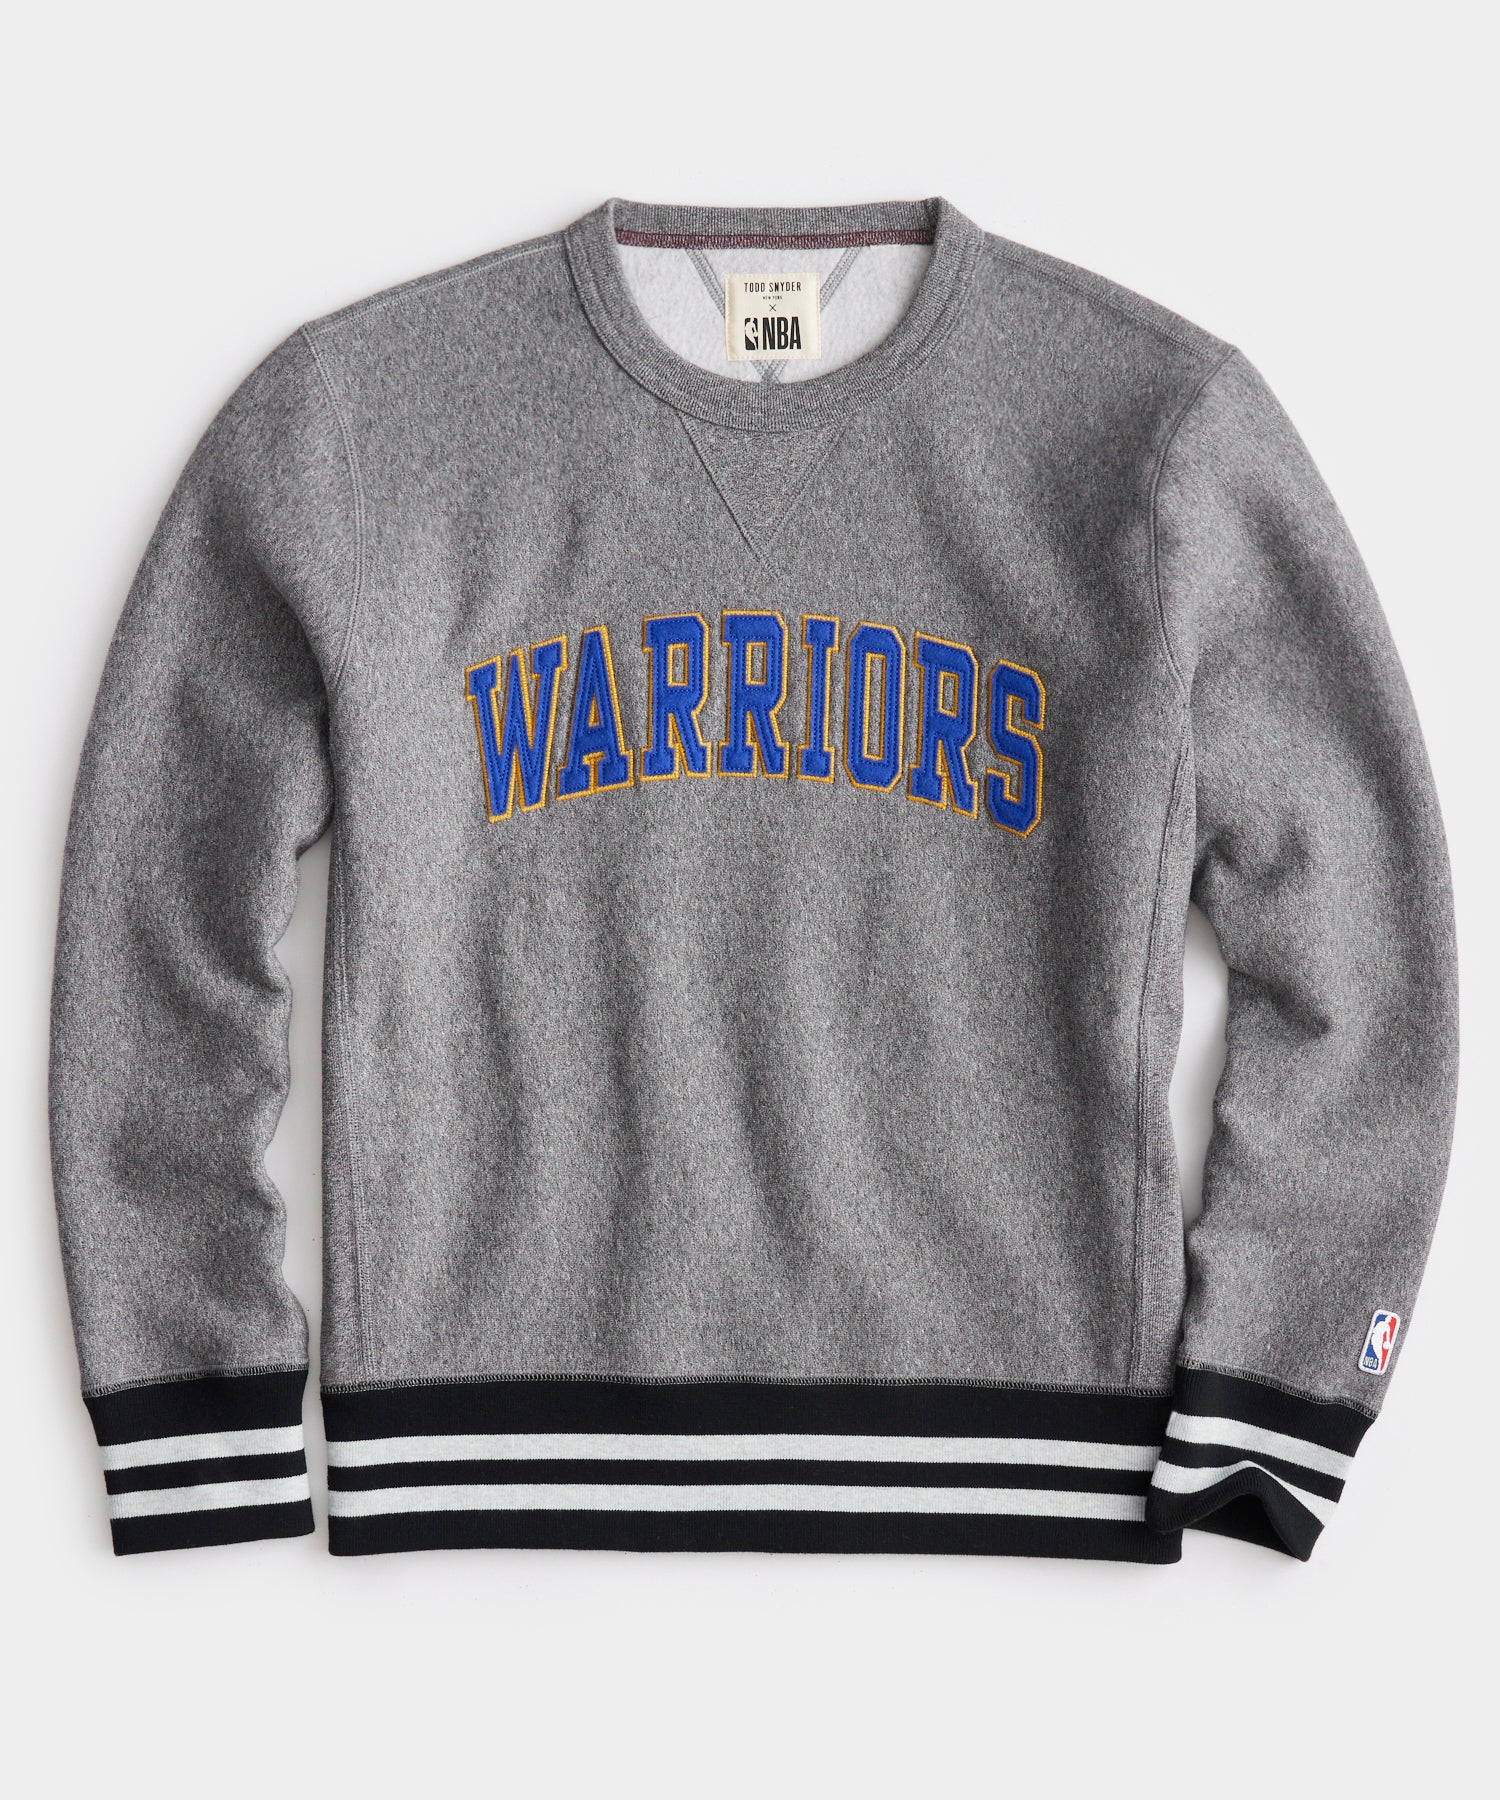 Official NBA Crew Sweatshirts, NBA Crew Neck Hoodie